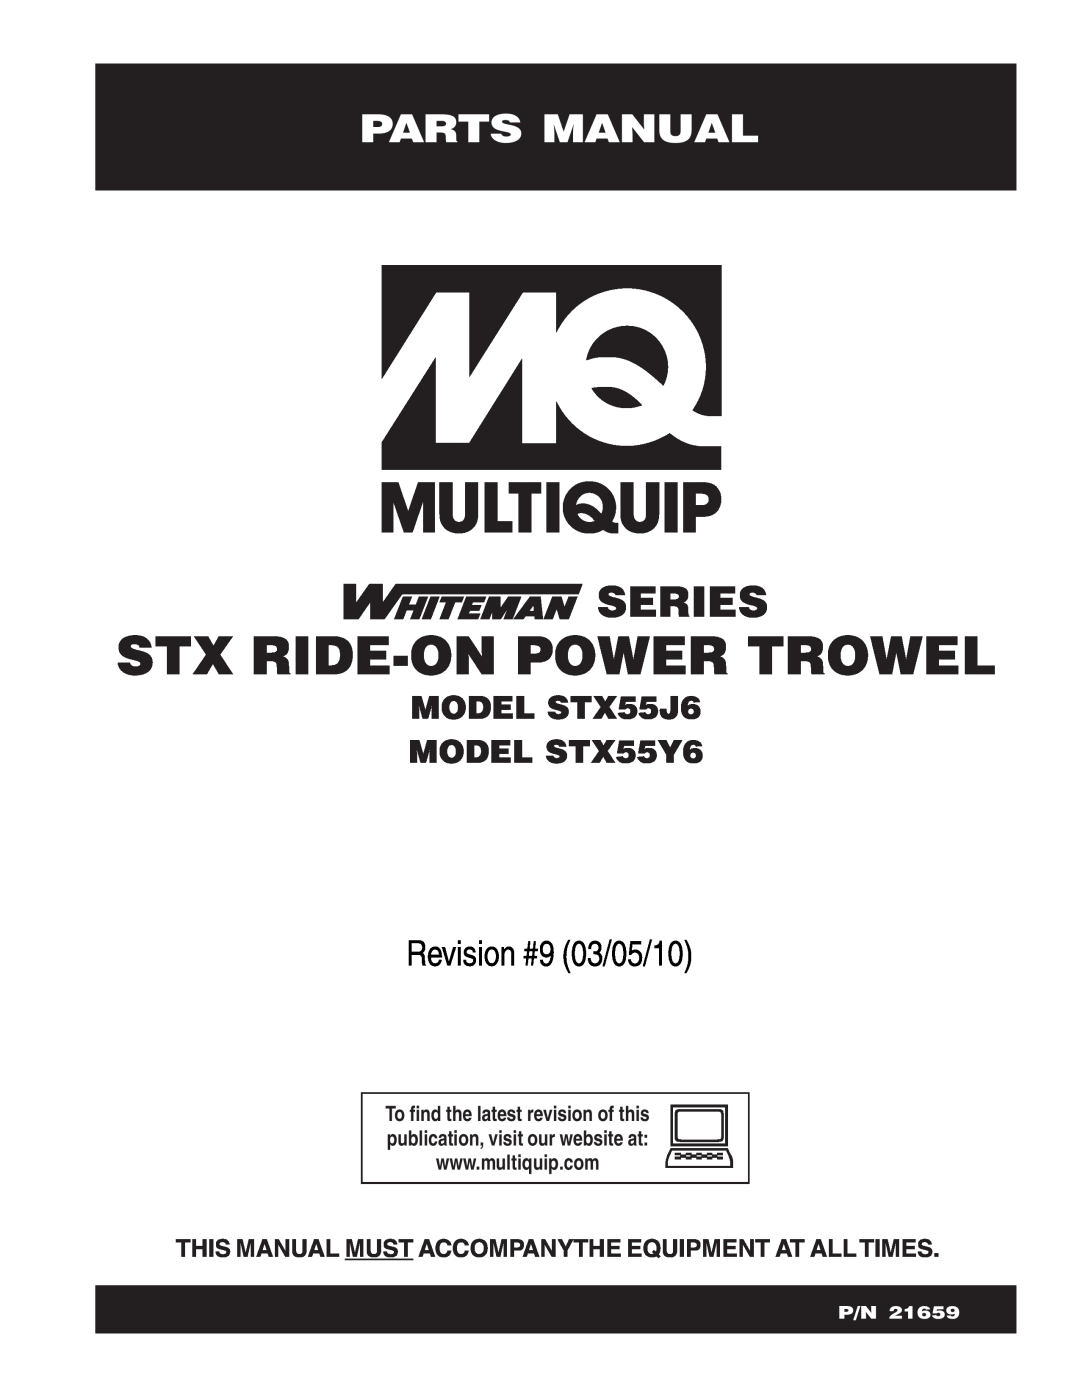 Multiquip operation manual STX RIDE-ONPOWER TROWEL STX55Y6, Series, Revision #0 03/15/06, Yanmar Diesel Engine 